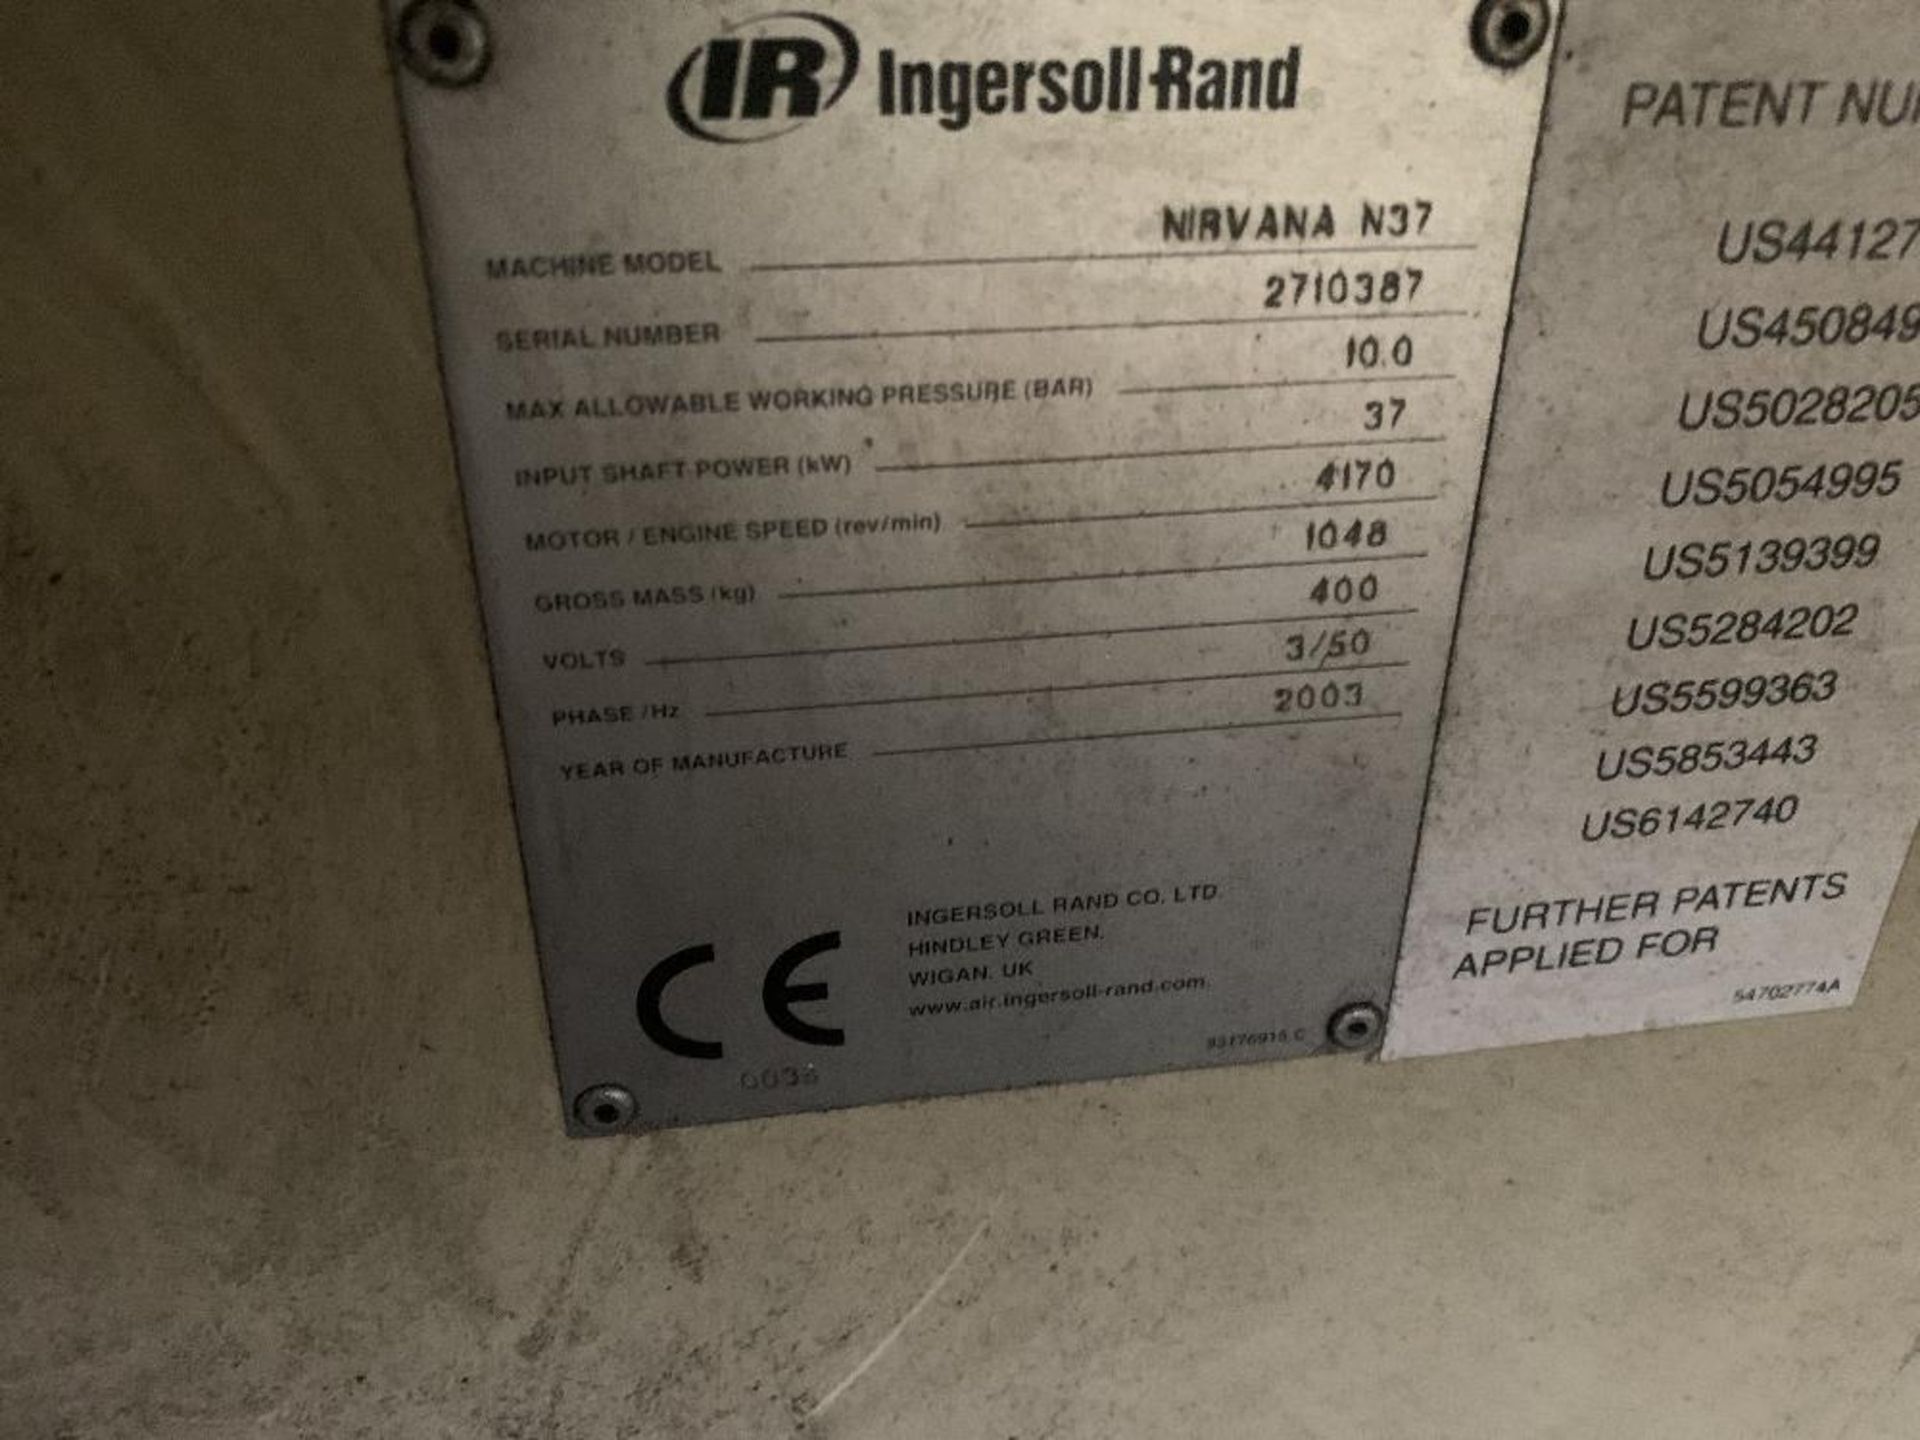 Ingersoll Rand Nirvana N37 compressor - Image 2 of 2